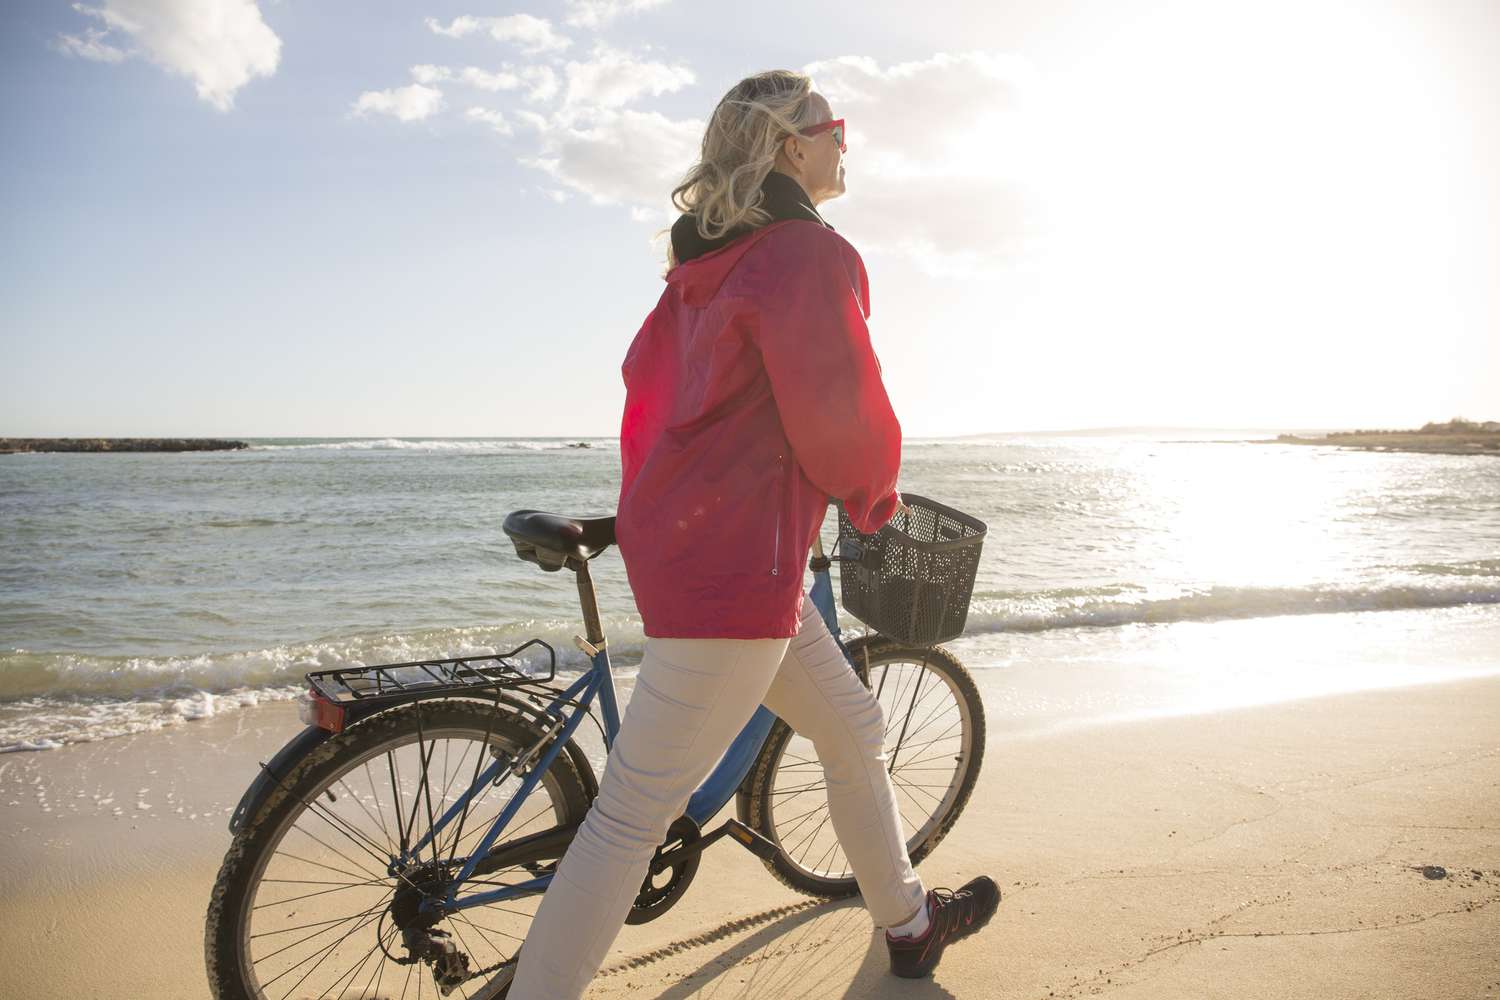 Woman pushes bike along sandy beach